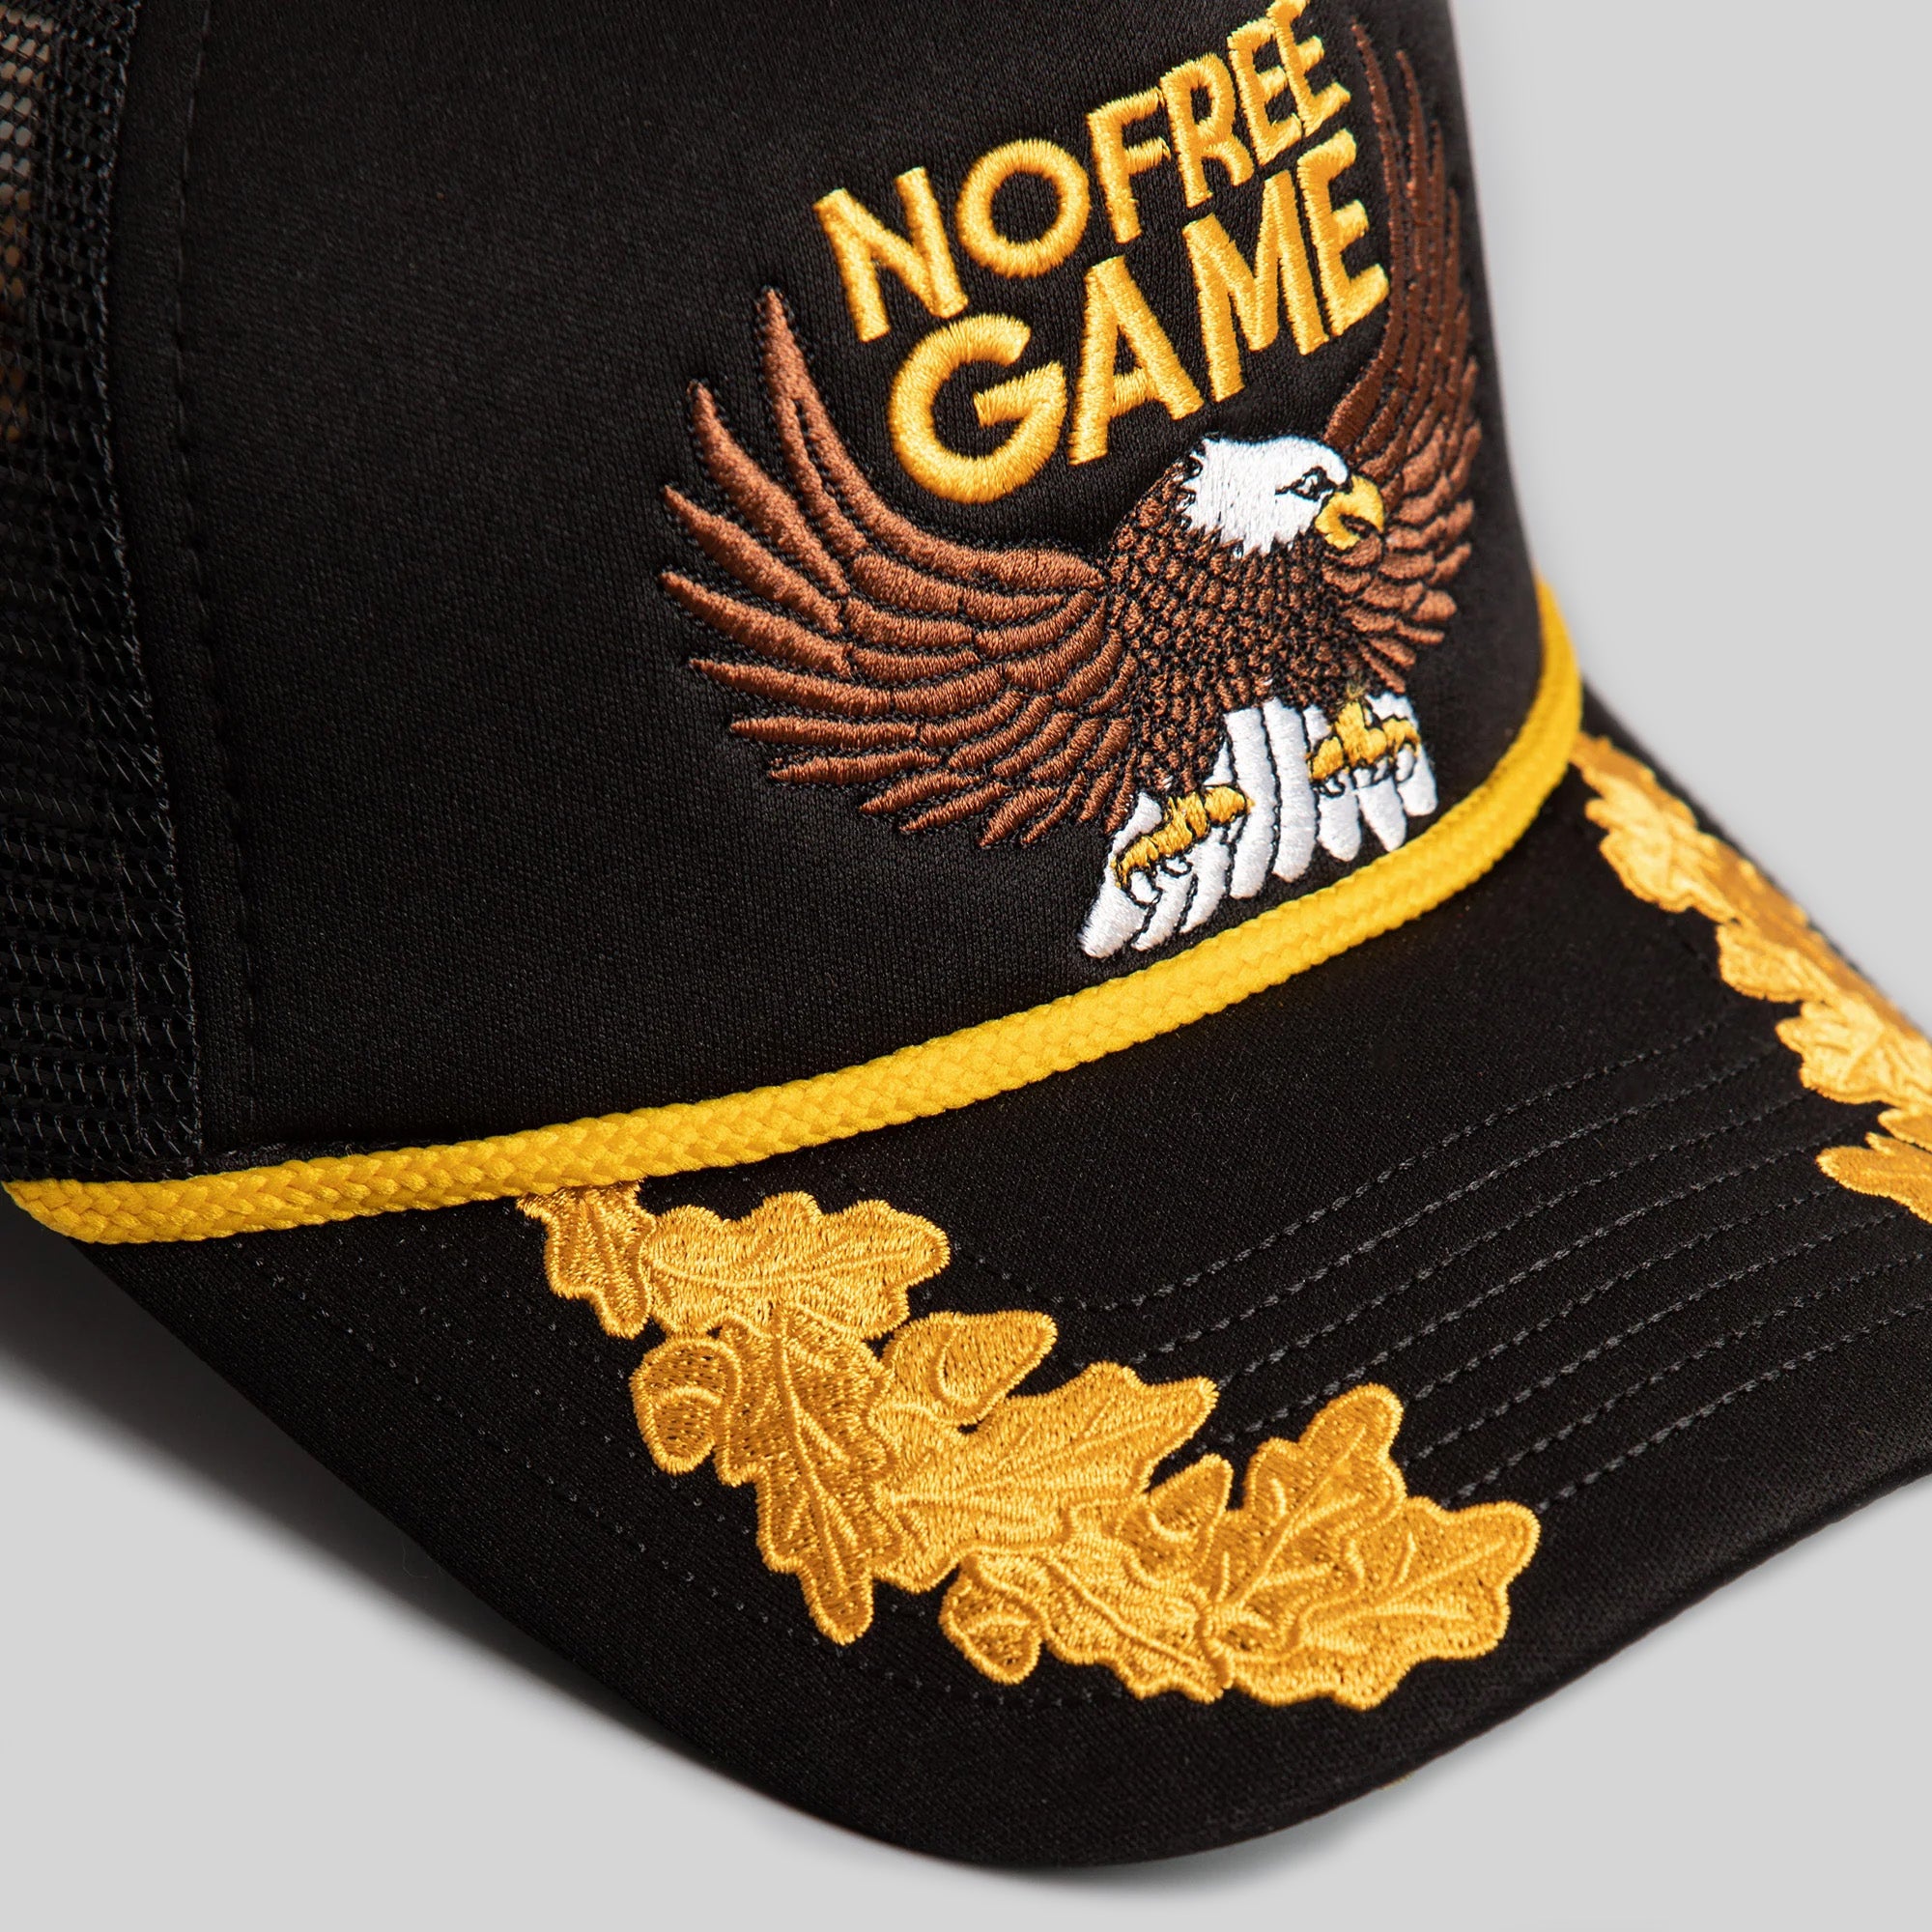 NO FREE GAME SCRAMBLED EGGS BLACK TRUCKER HAT